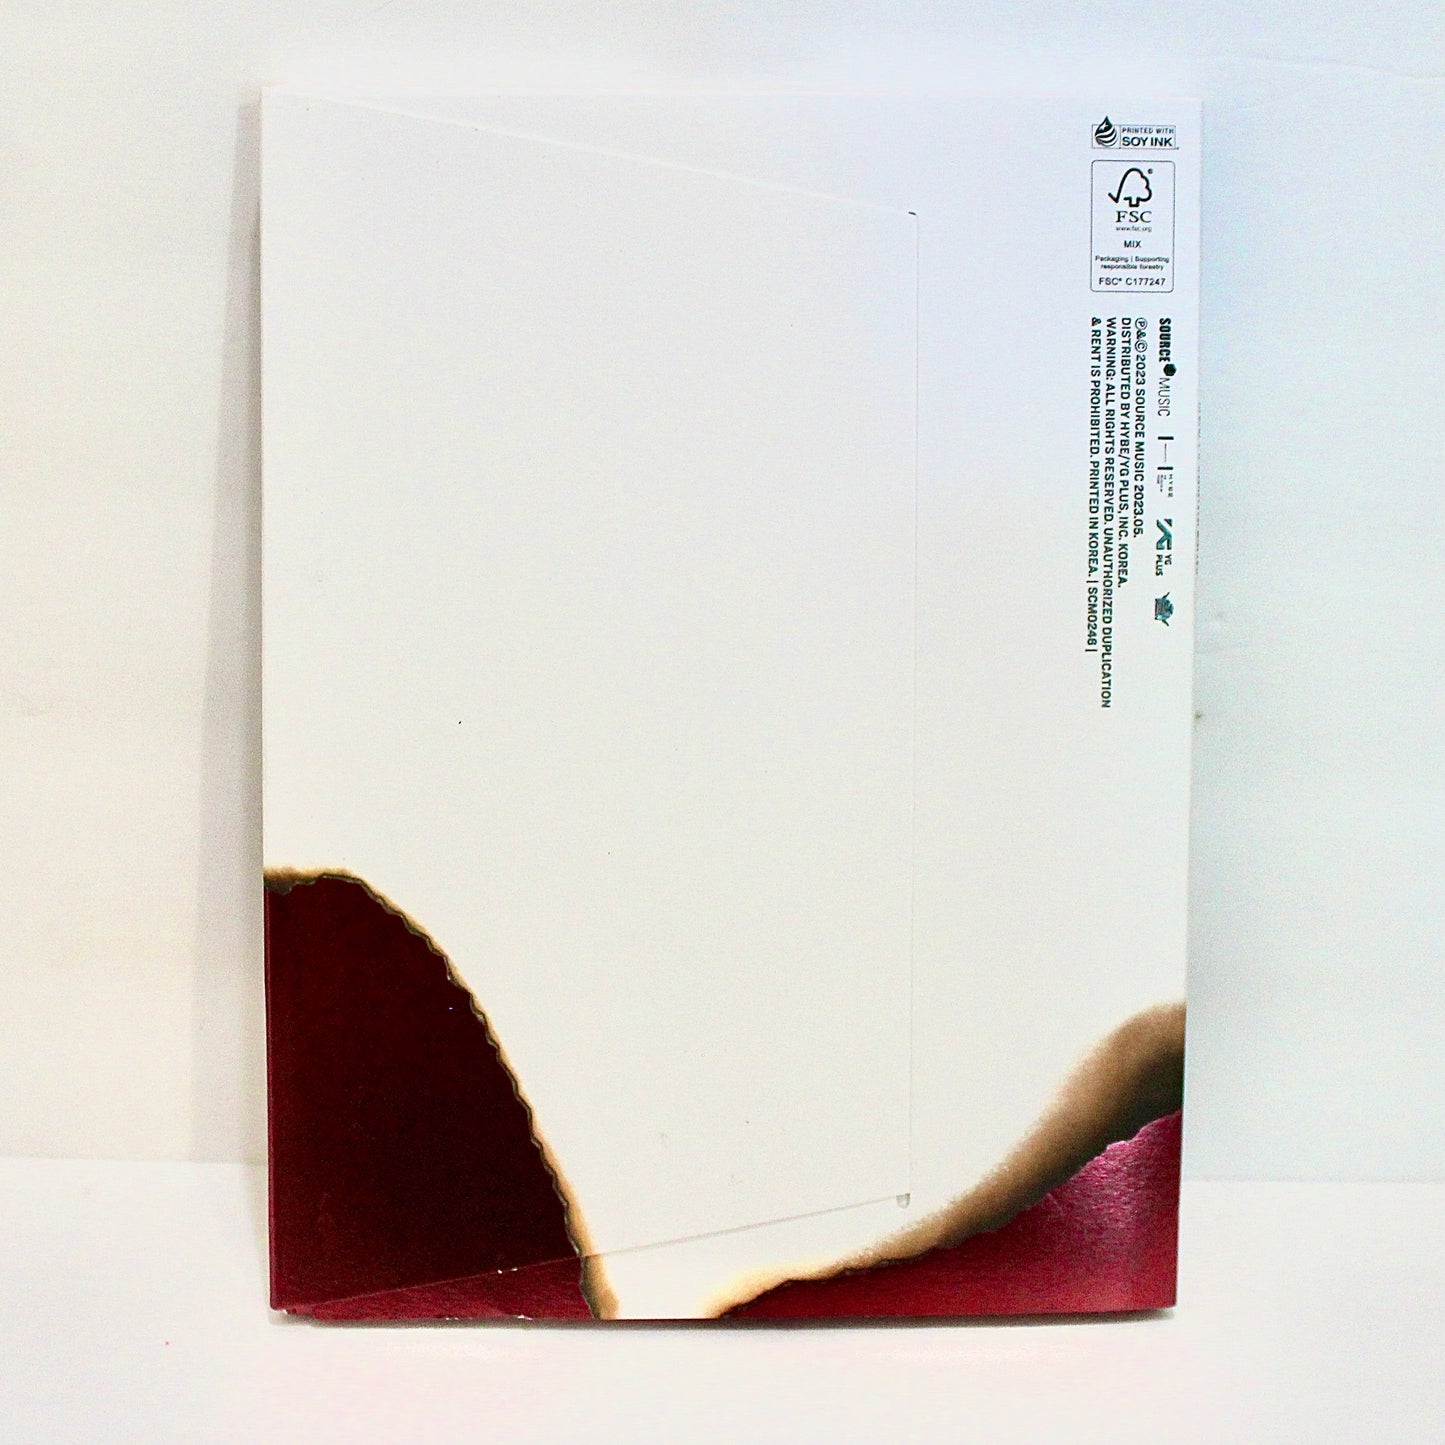 LE SSERAFIM 1st Album: UNFORGIVEN | Bloody Rose Ver.